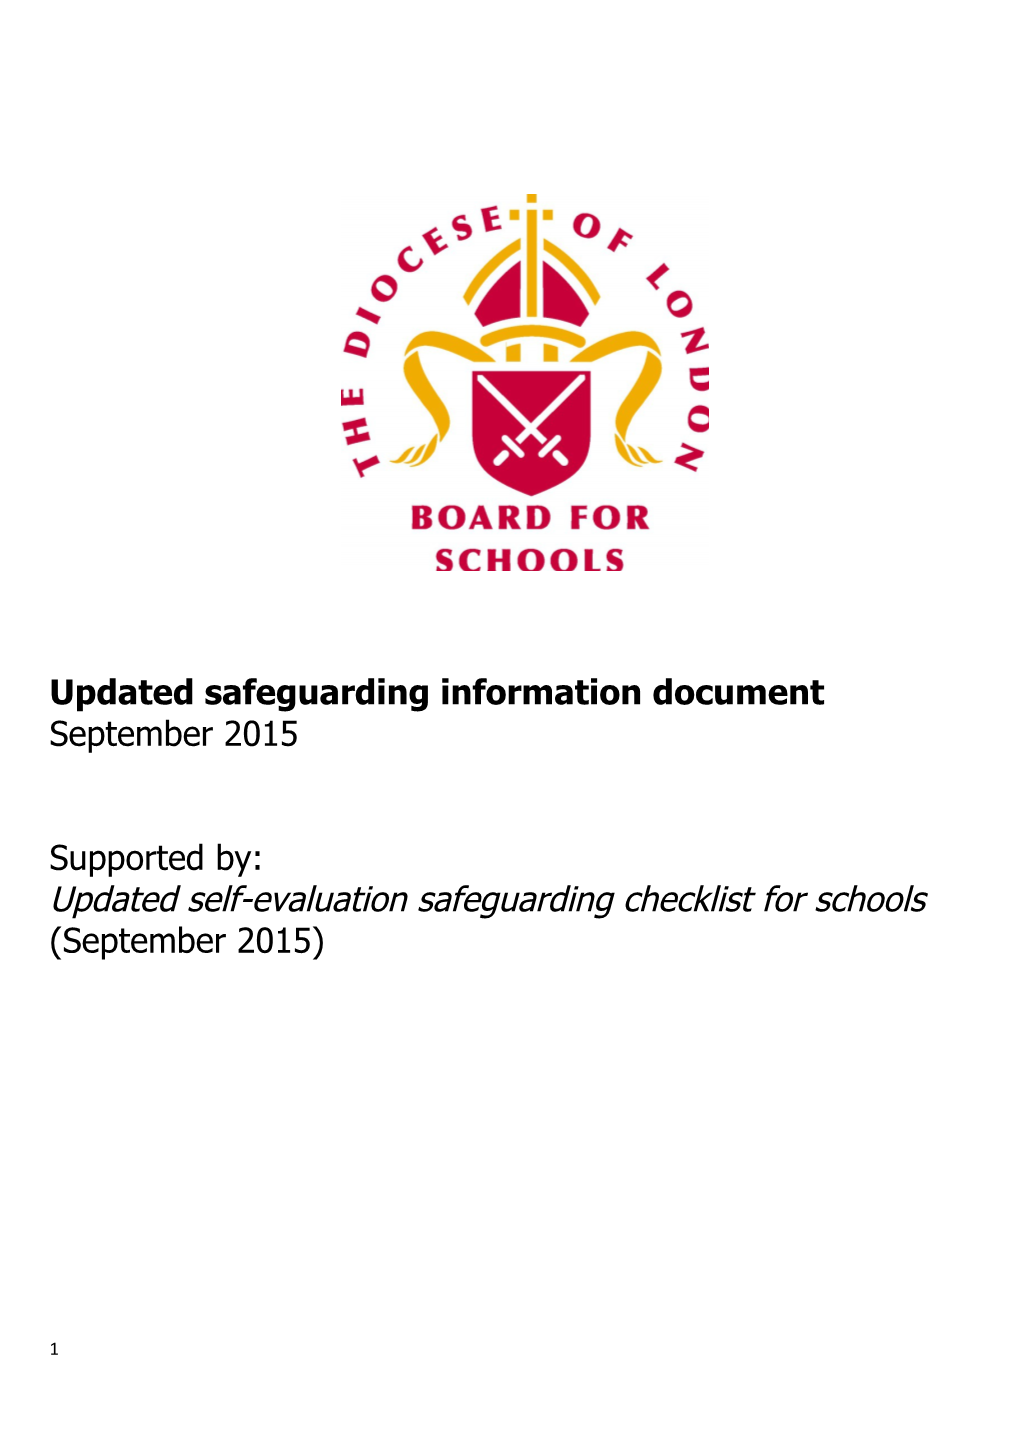 Updated Safeguarding Information Document September 2015